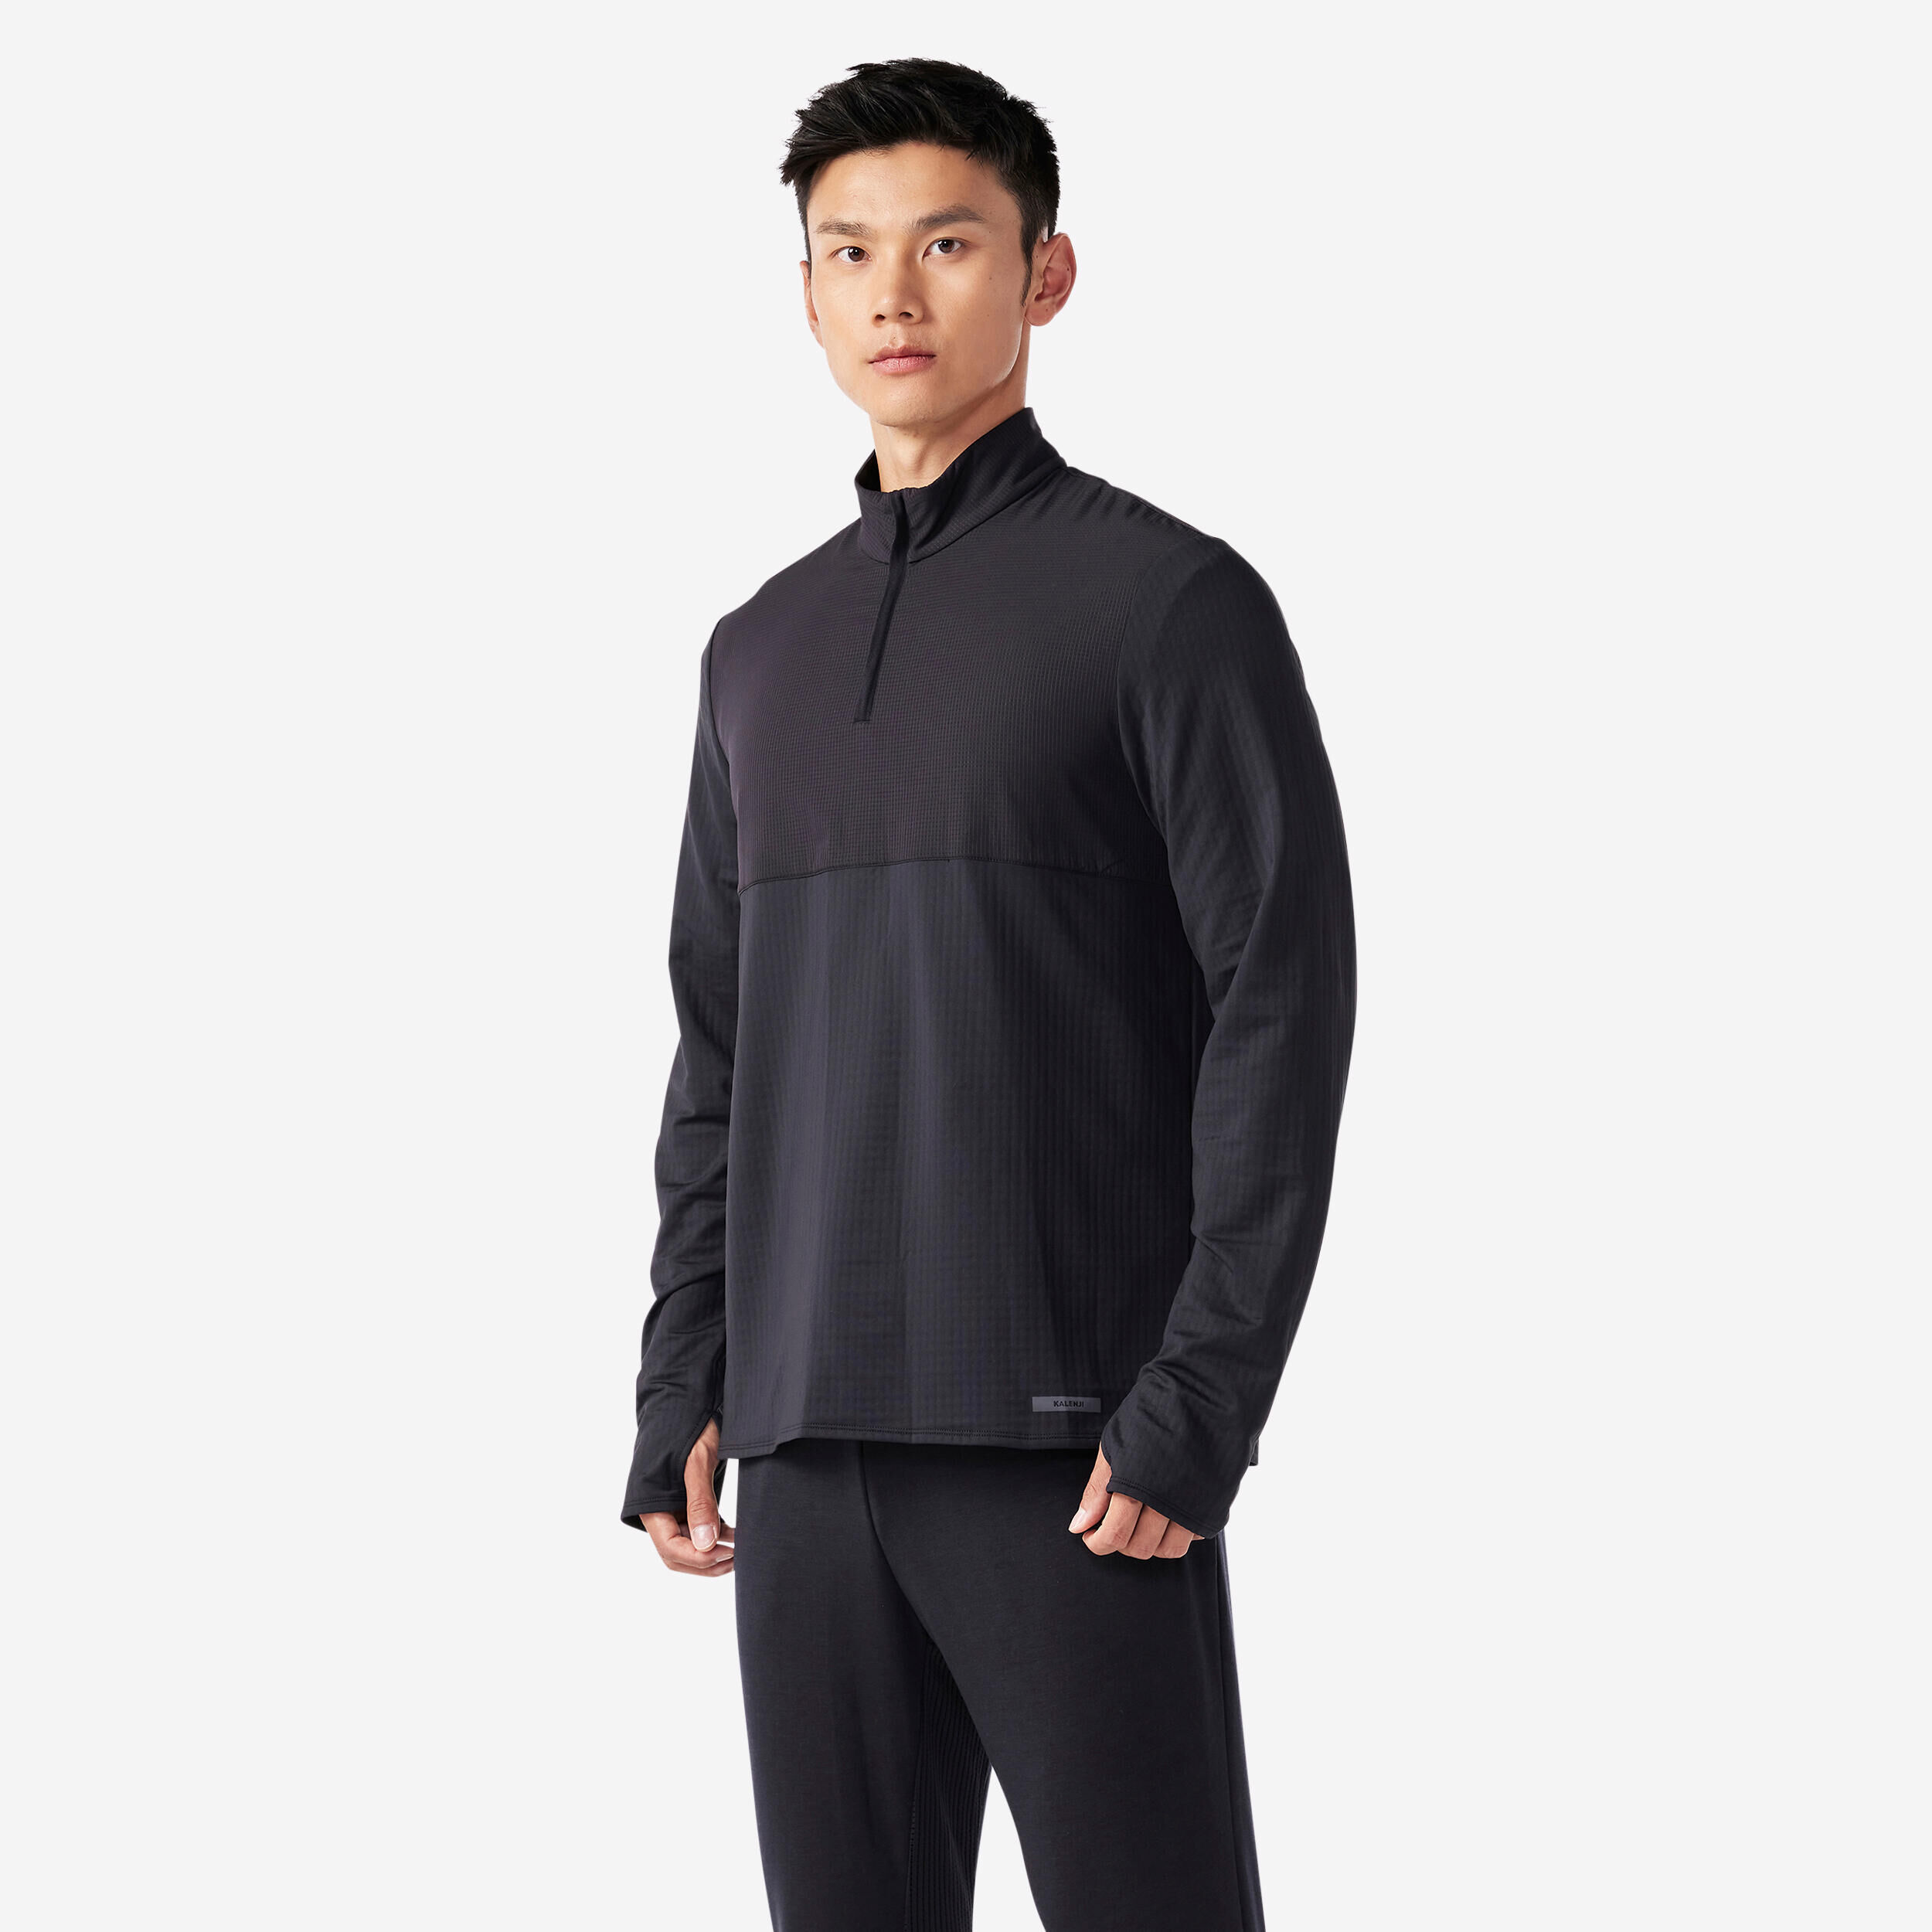 KALENJI Men's Running Warm Long-Sleeved T-shirt Warm 500 - black